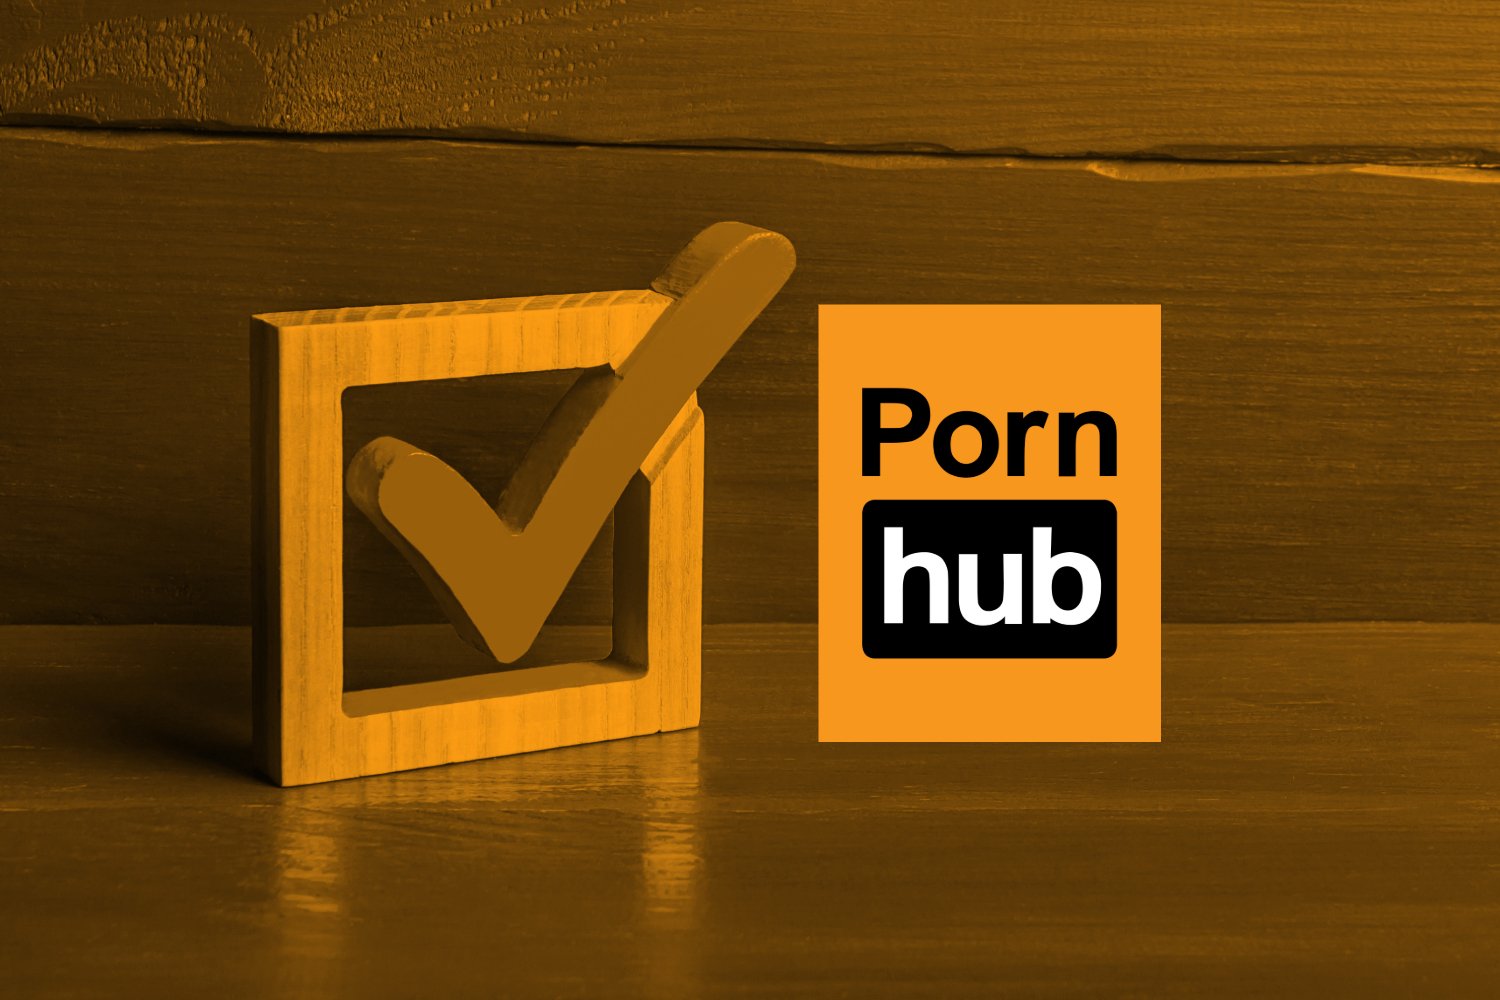 Check Pornhub